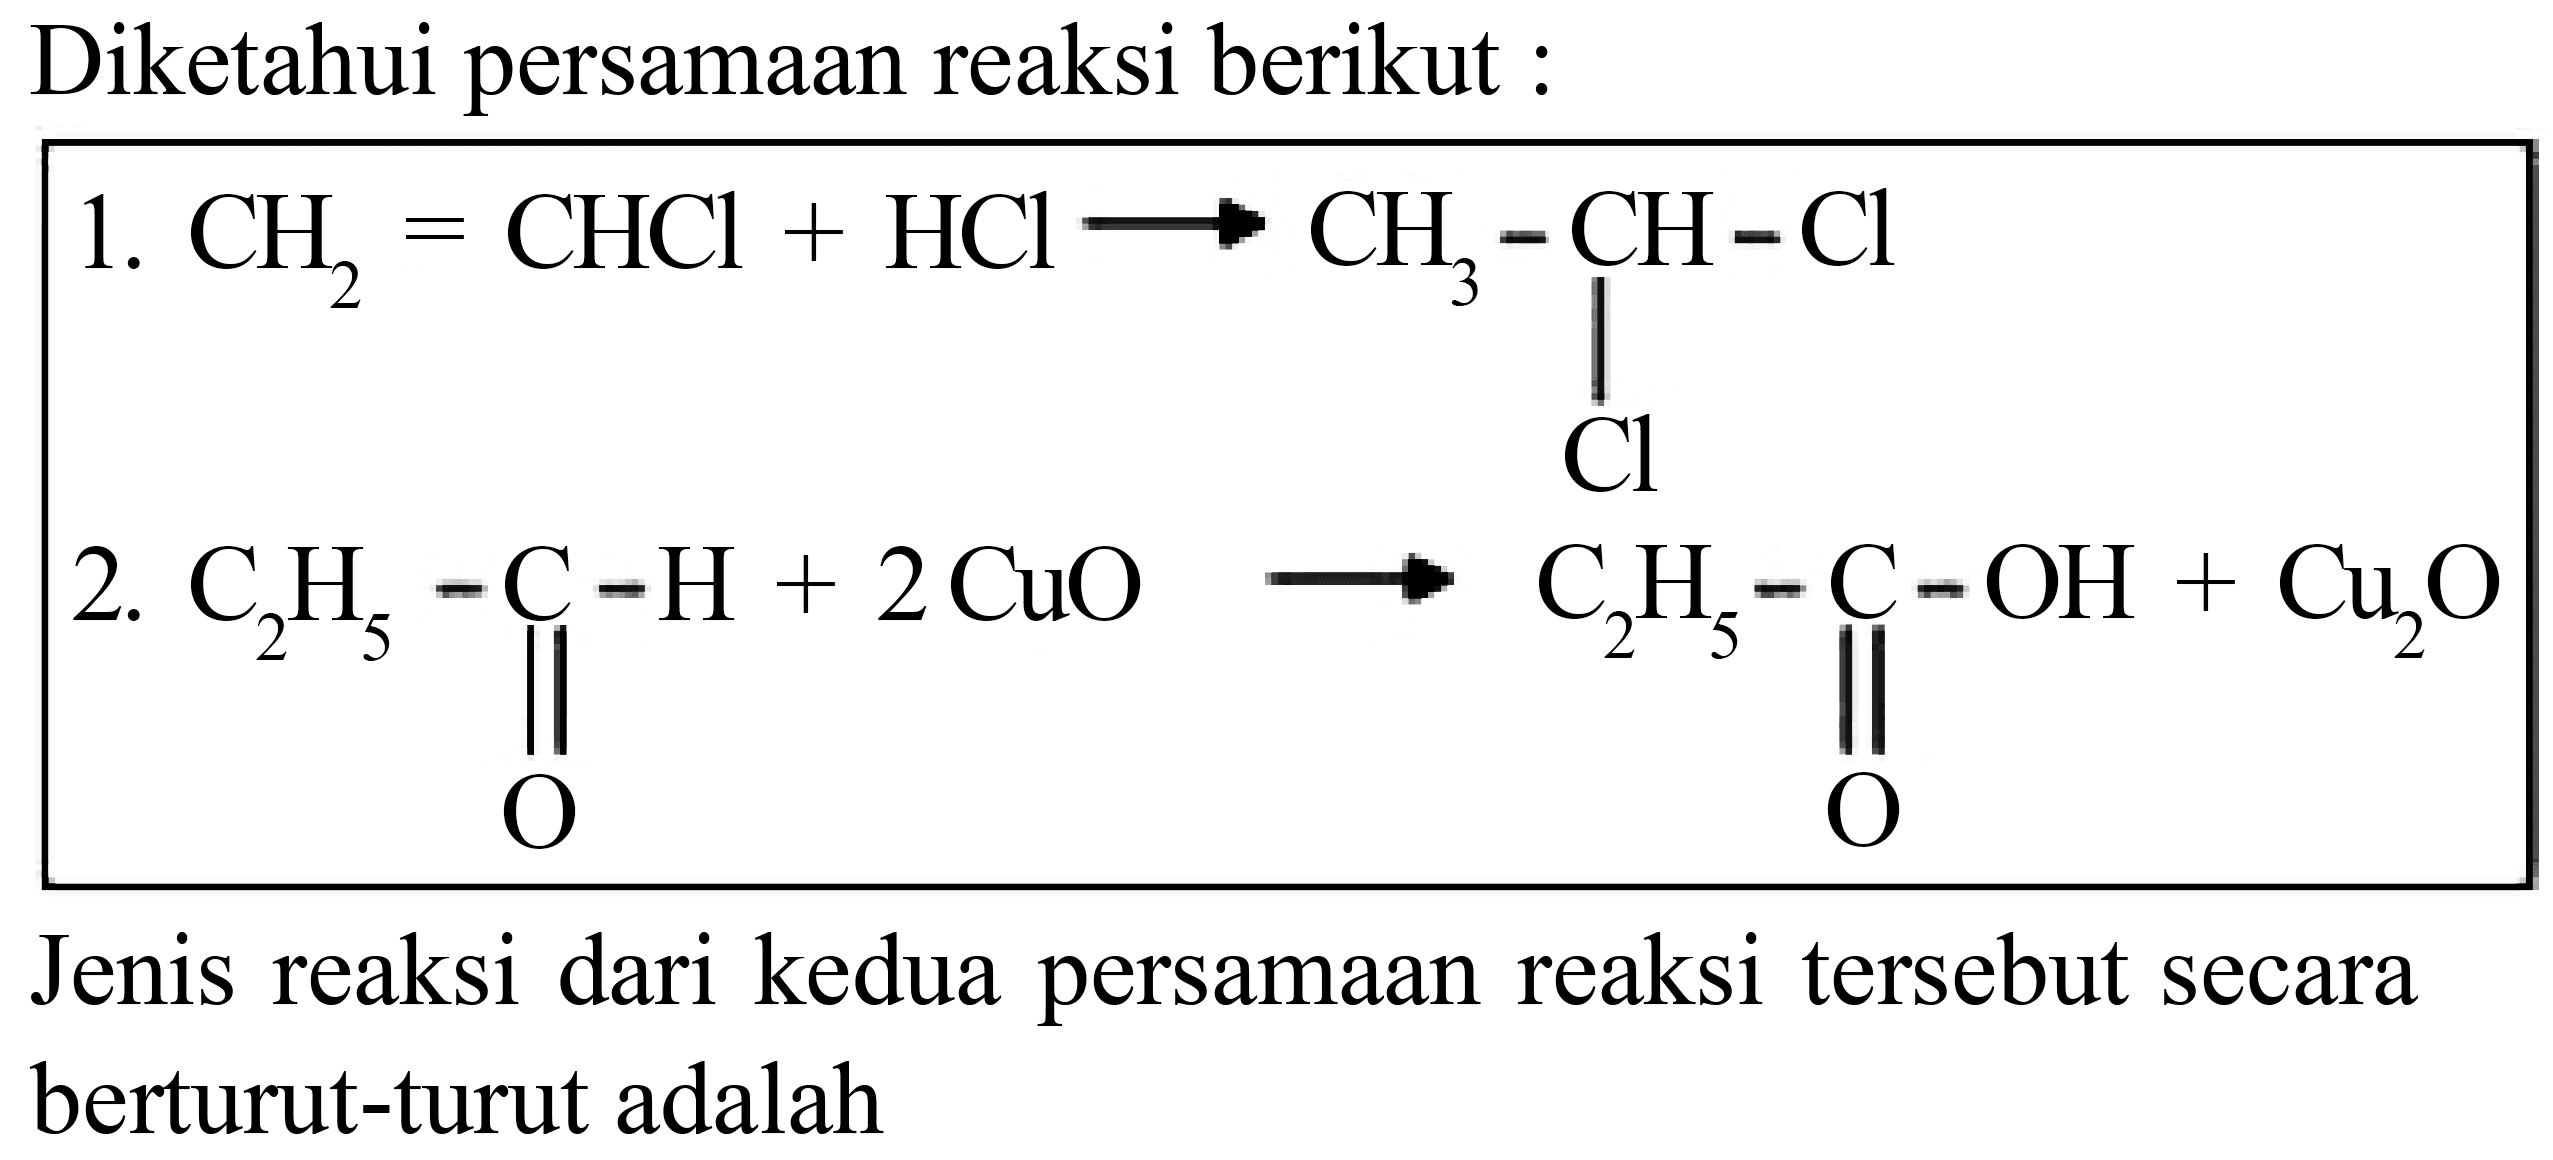 Diketahui persamaan reaksi berikut :
1. CH2=CHCl + HCl - > CH3 - CH - Cl Cl 2. C2H5 - C - H O + 2 CuO - > C2H5 - C - OH O + Cu2O Jenis reaksi dari kedua persamaan reaksi tersebut secara berturut-turut adalah 